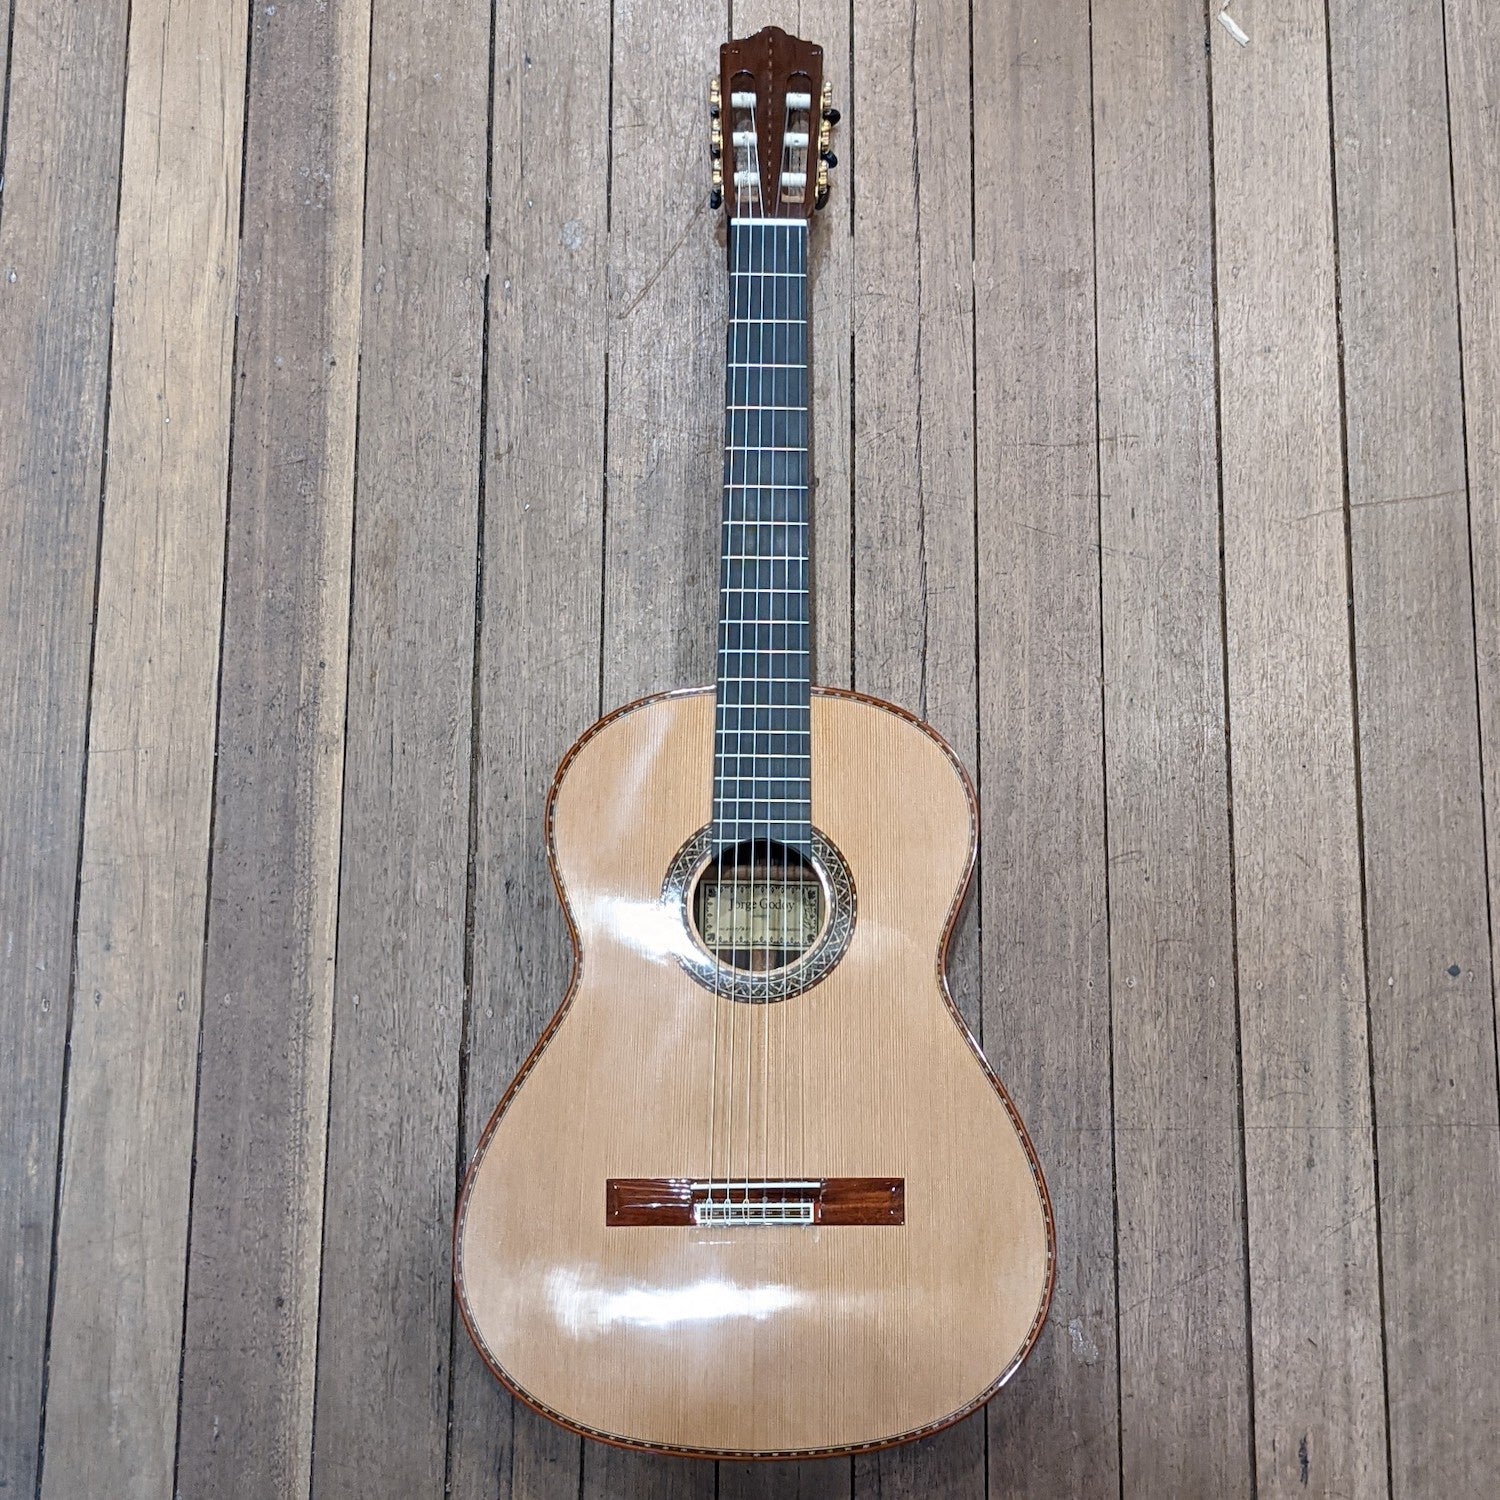 J. Godoy by Katoh Albatross Classical Guitar Cedar/Indian Rosewood